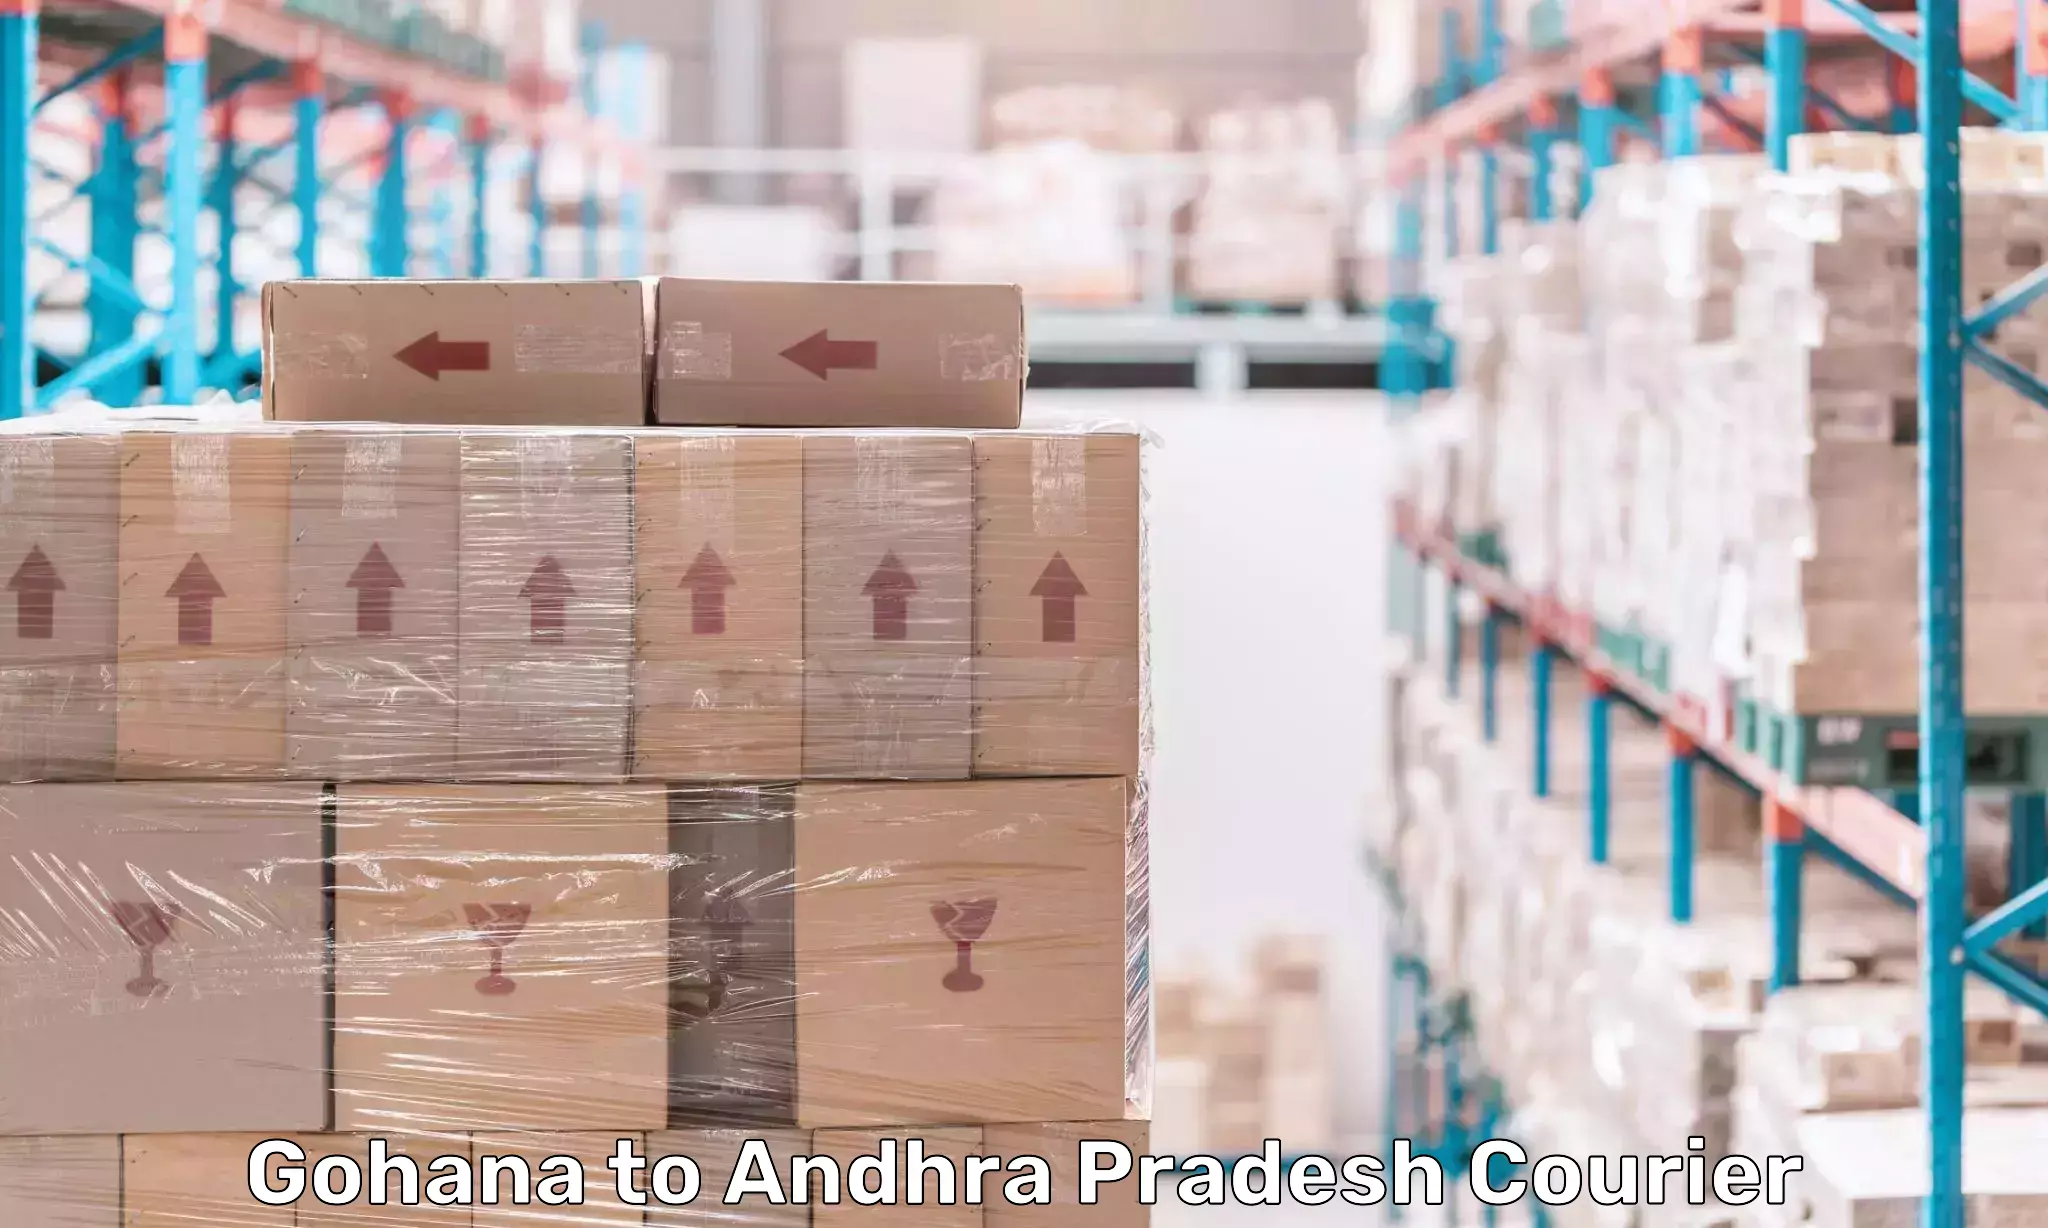 Express delivery capabilities Gohana to Andhra Pradesh